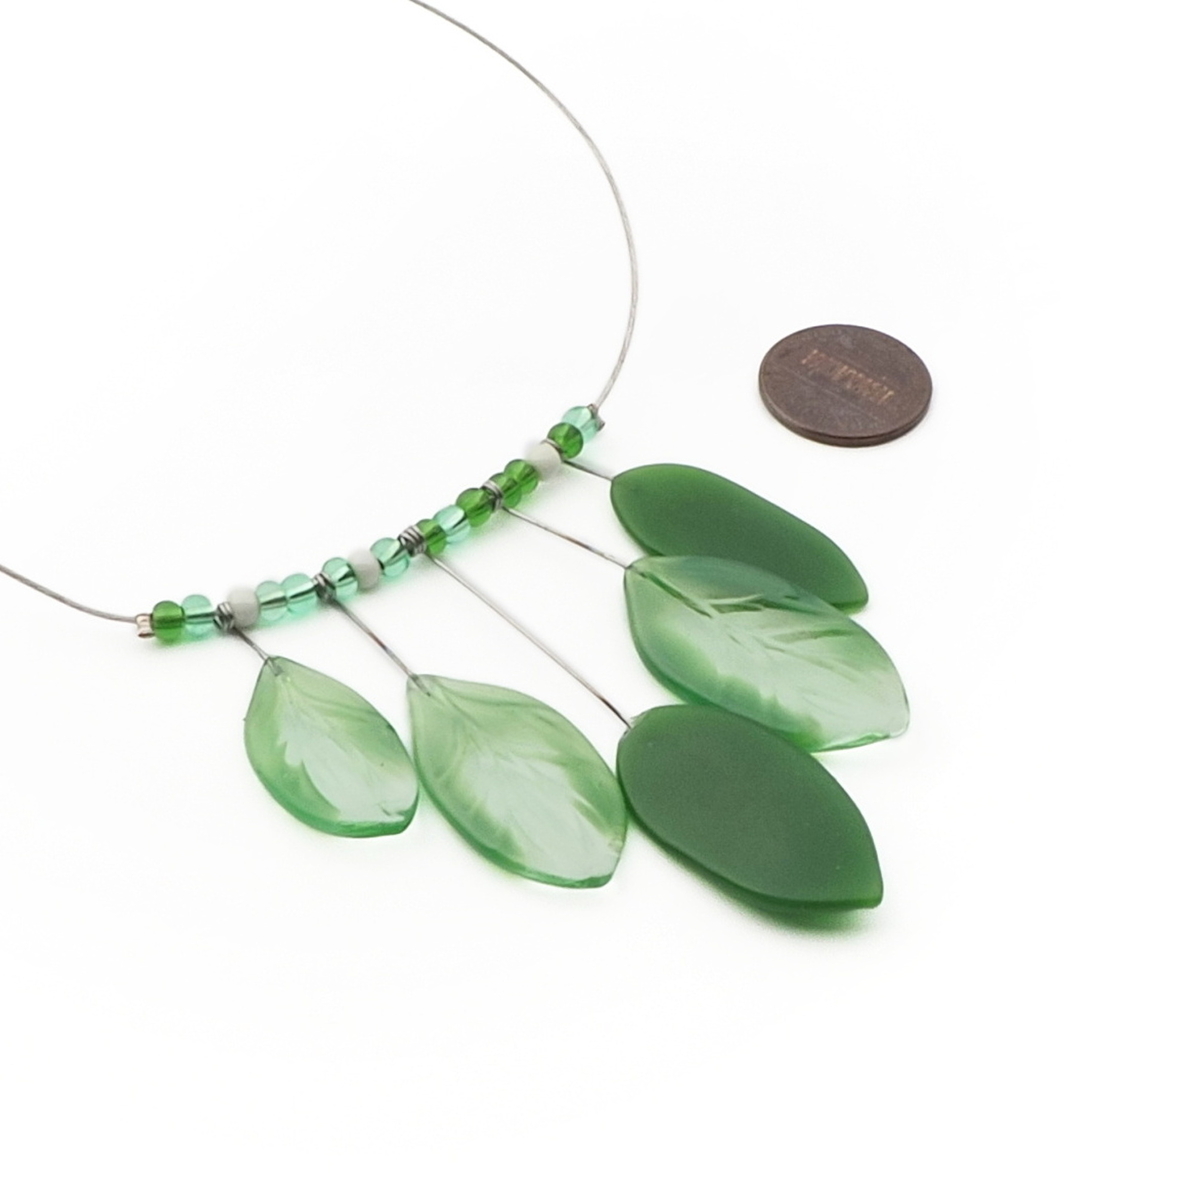 Czech lampwork green leaf glass bead necklace